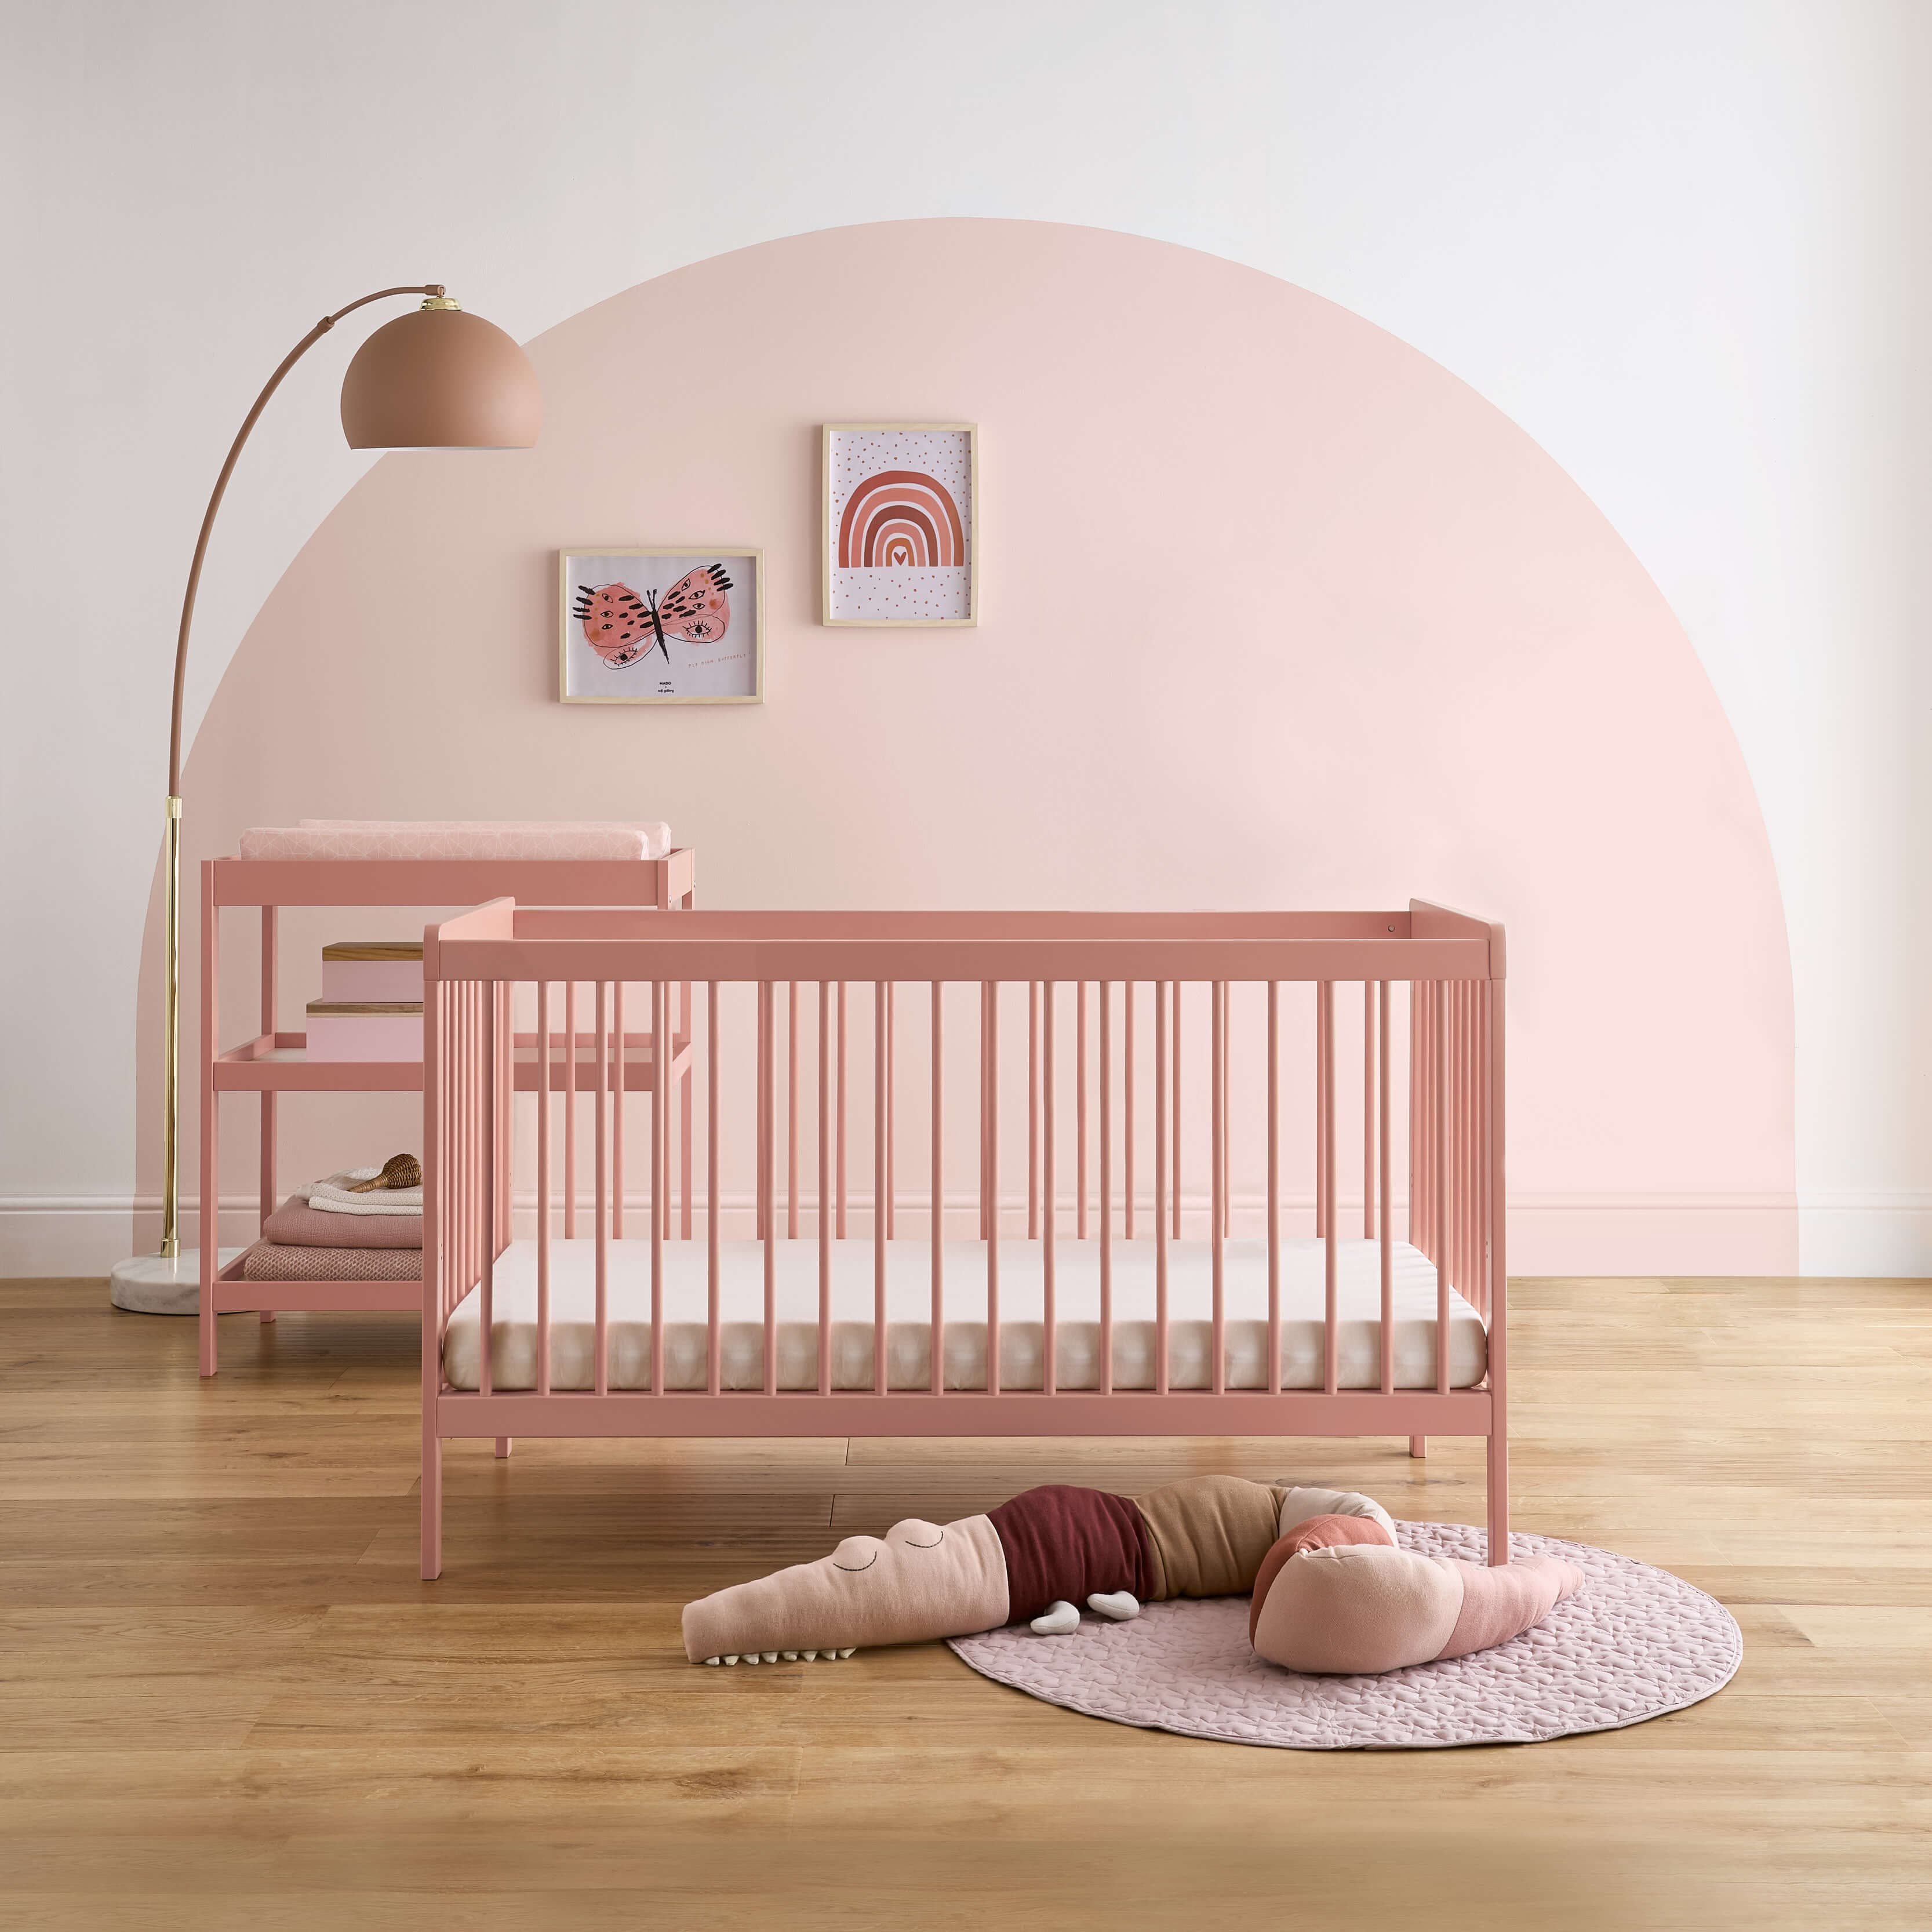 CuddleCo Nola 2 Piece Room Set in Soft Blush Nursery Room Sets